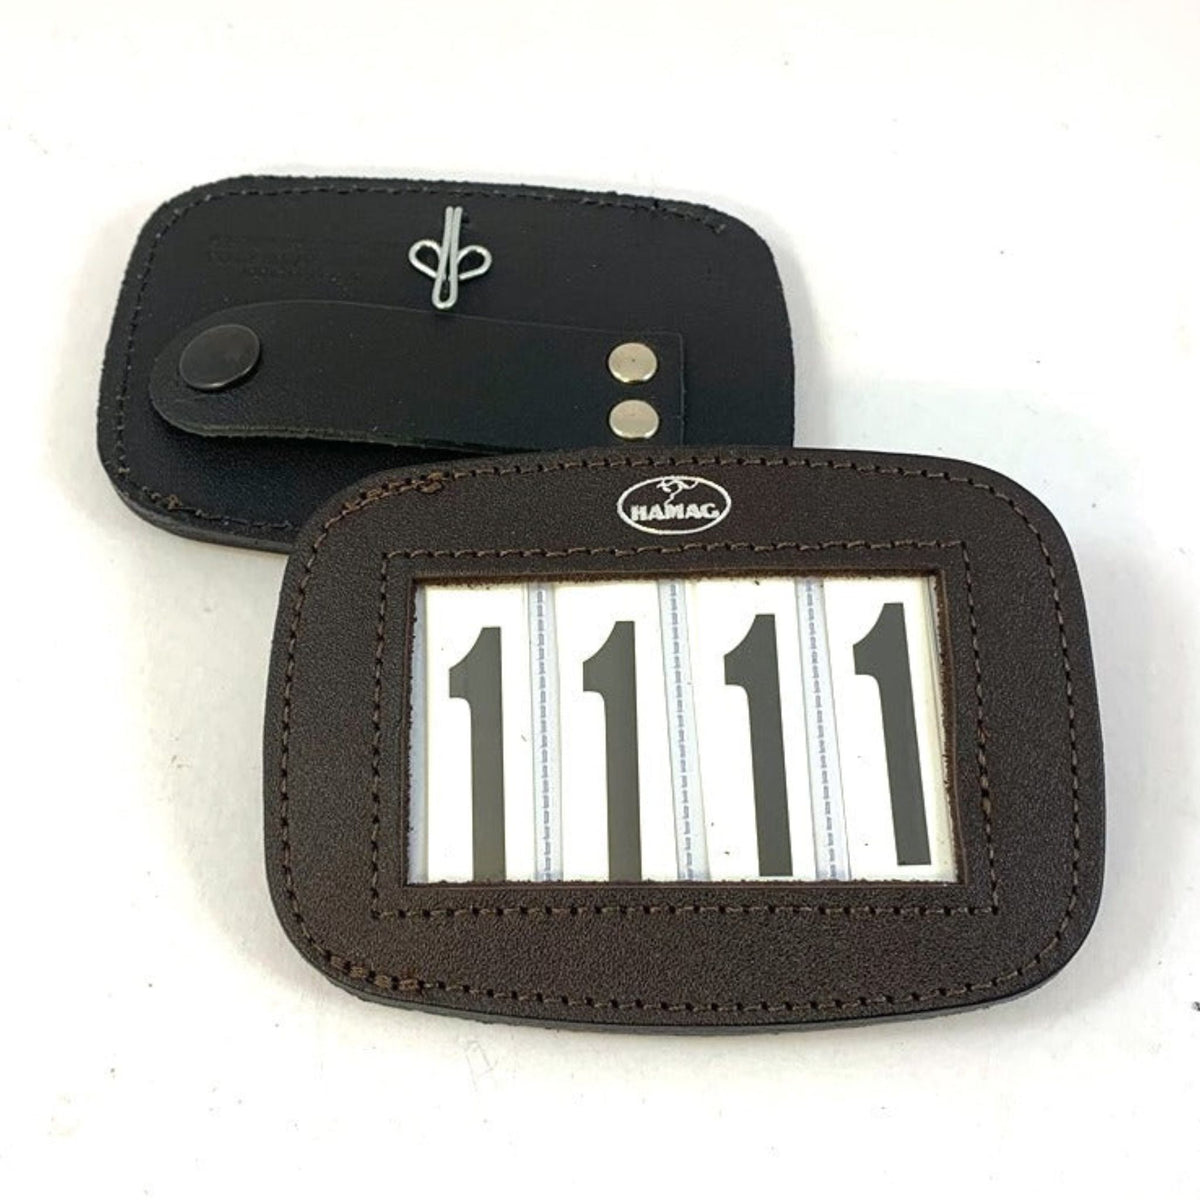 Brown Leather Number holder with Hamag logo above number slots.